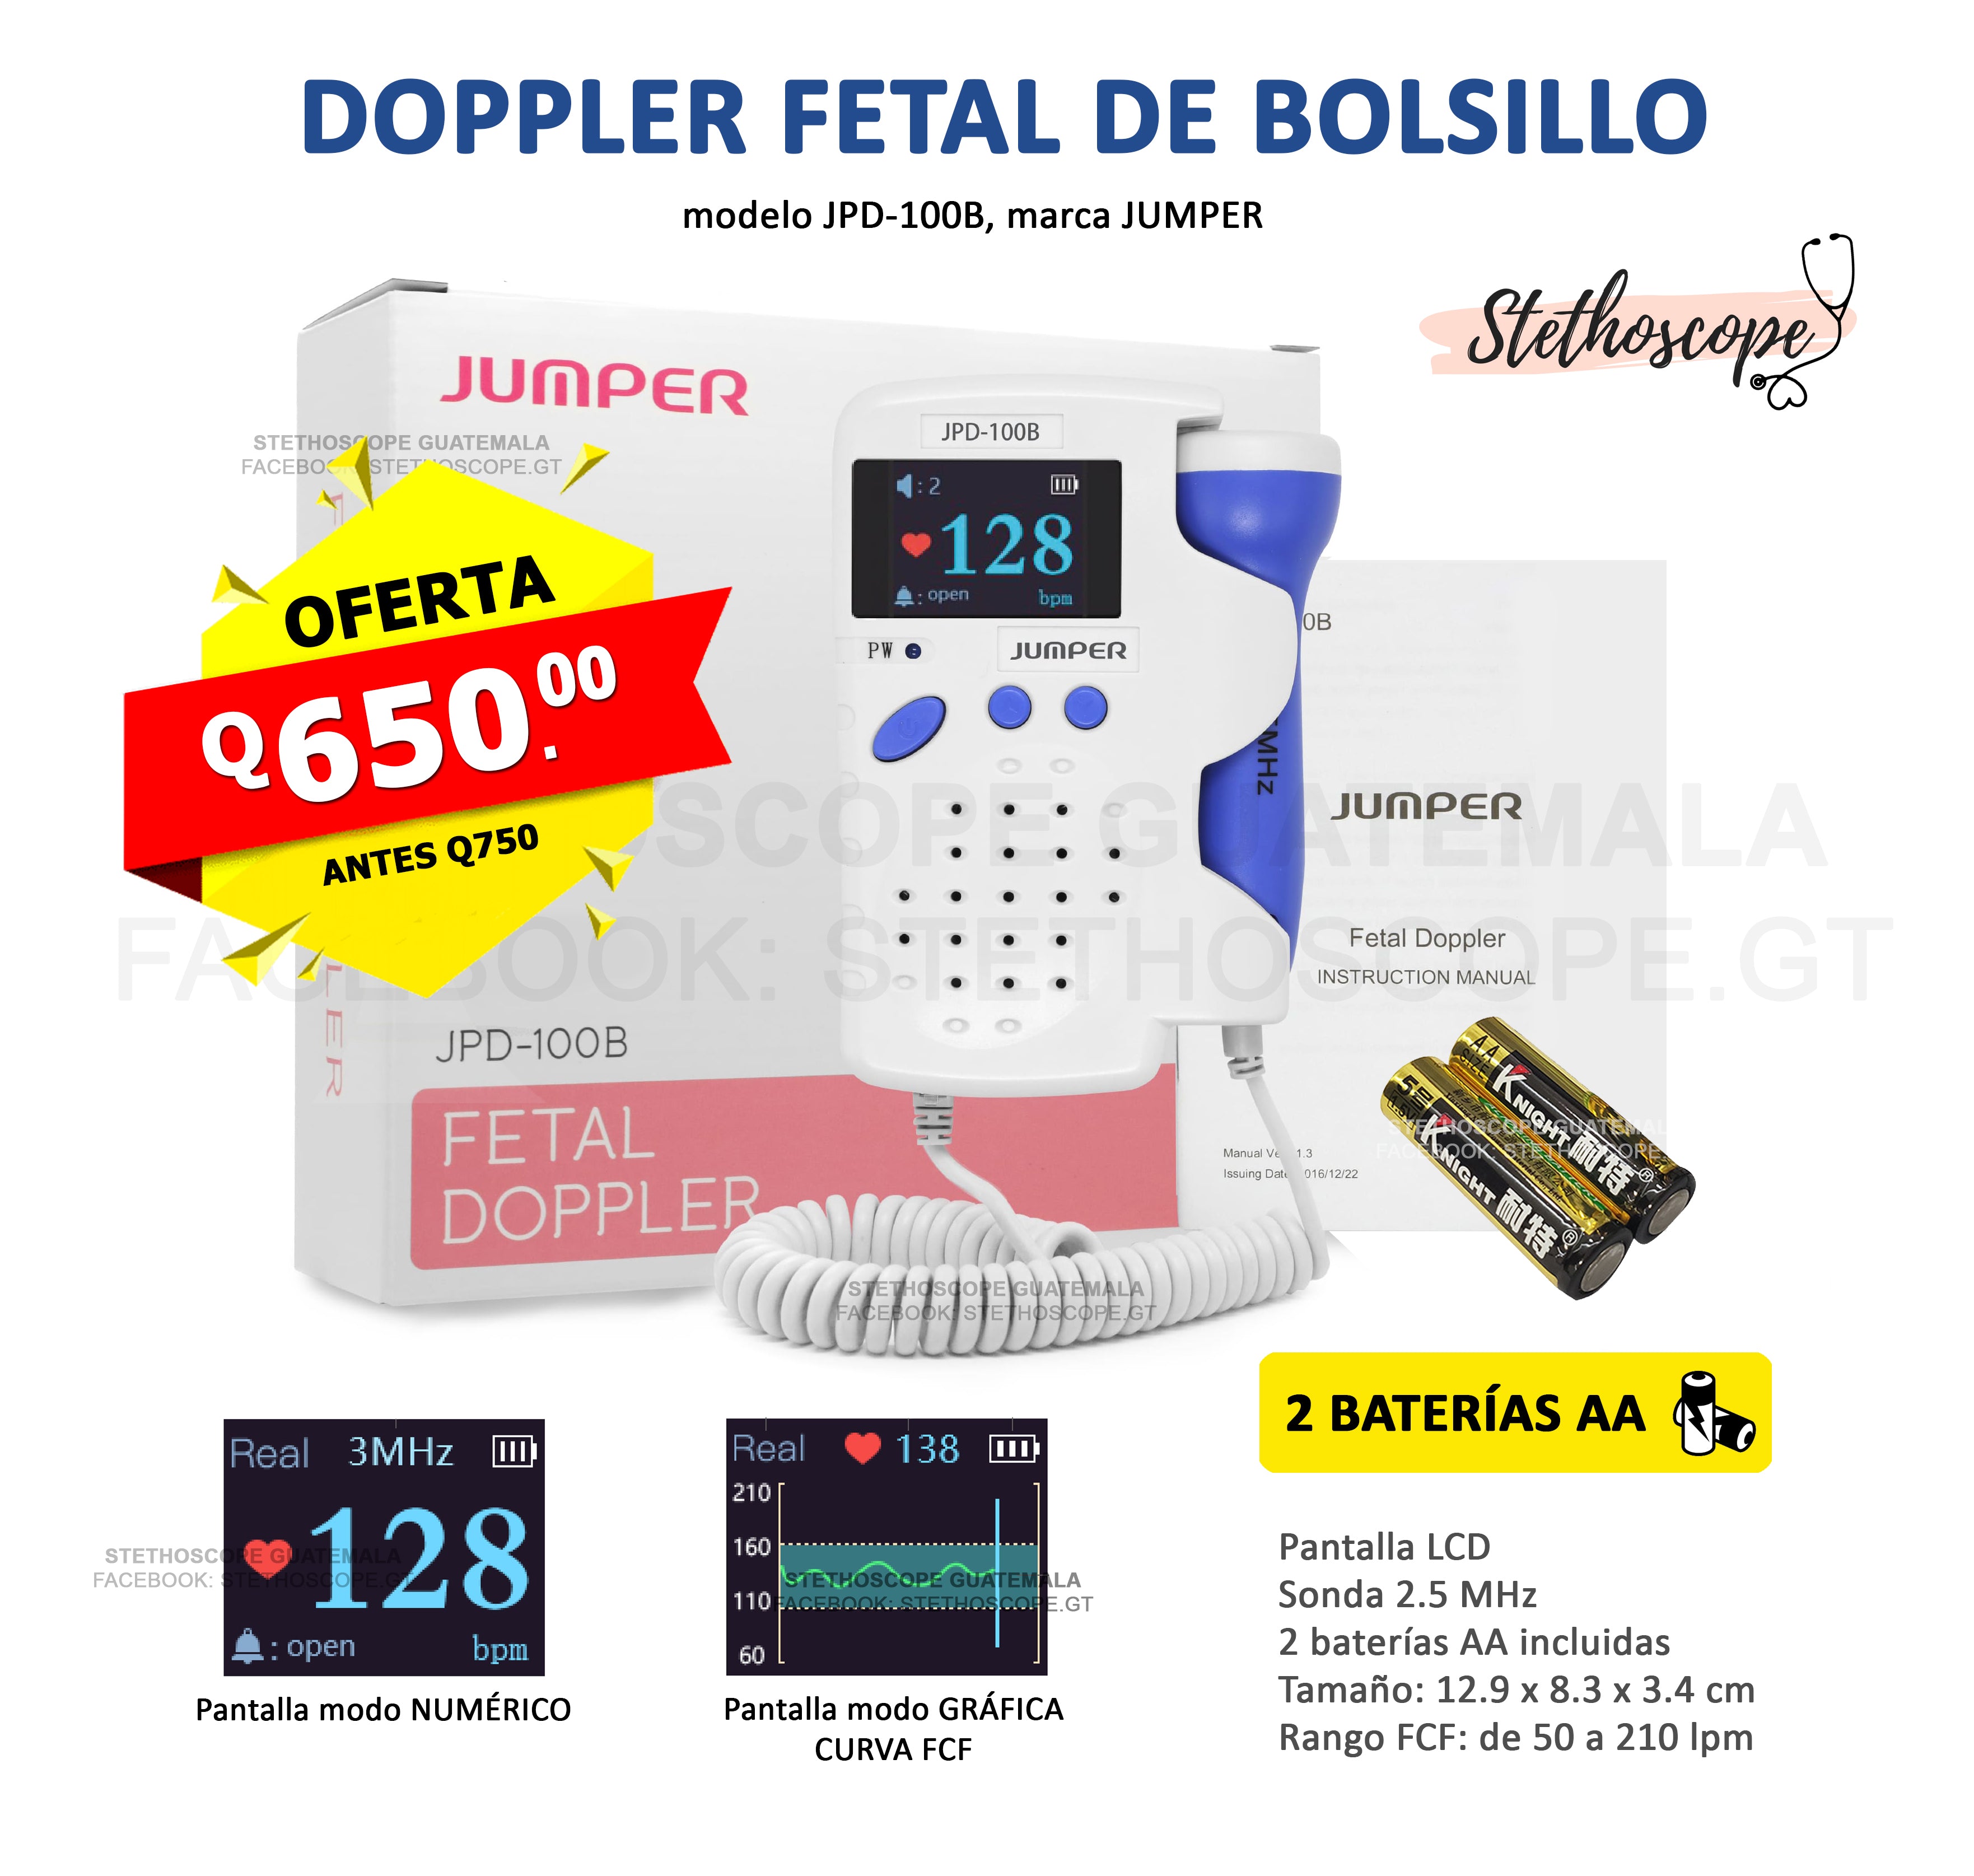 Doppler fetal portátil con pantalla LCD azul, 2.5 Mhz., marca Jumper,  JUM-JPD-100B